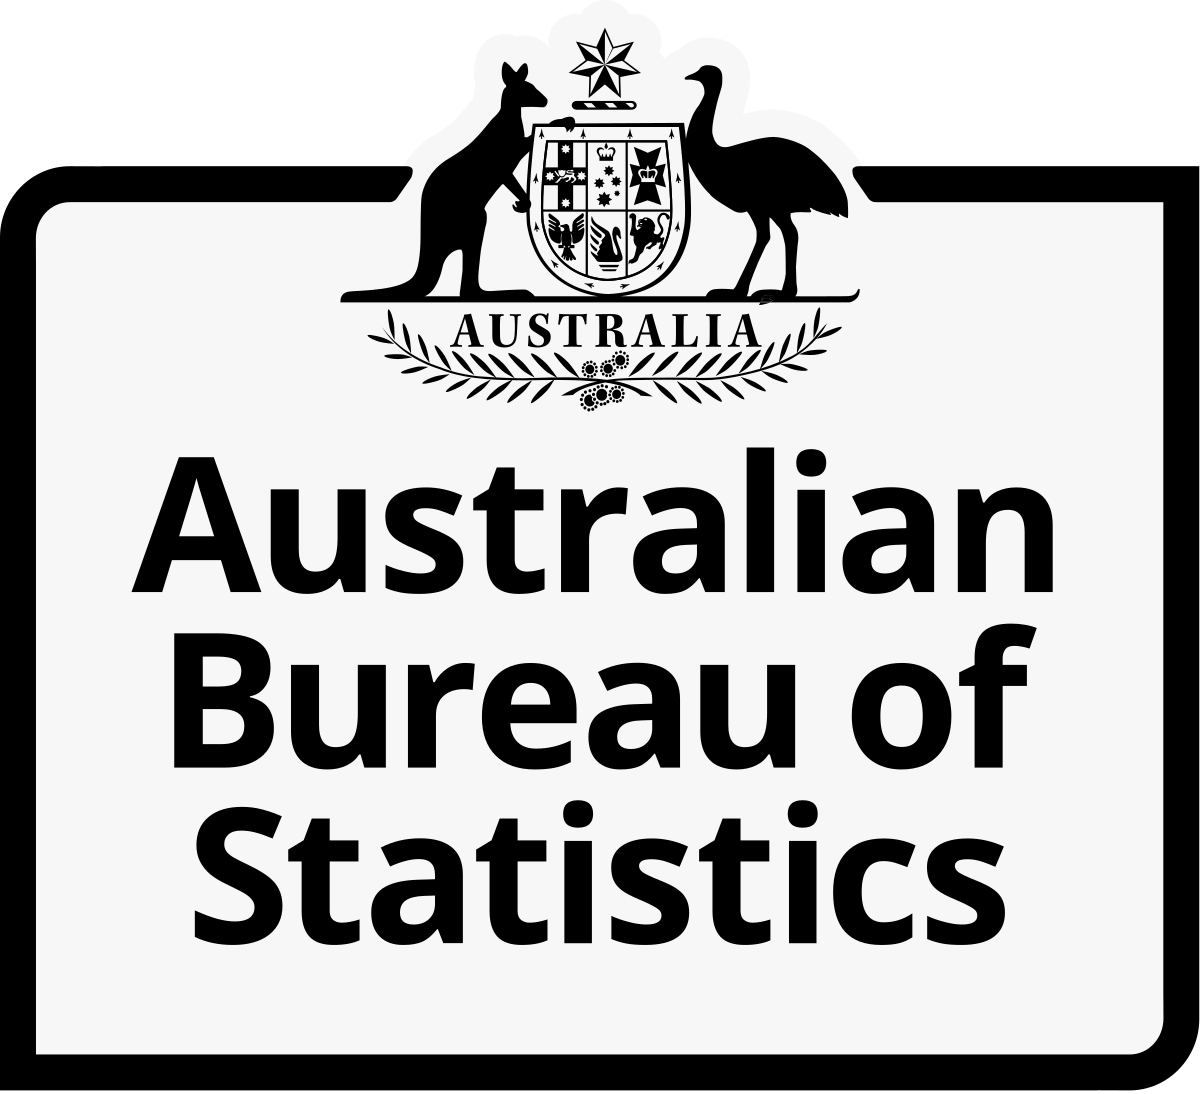 The logo for the Australian Bureau of Statistics.